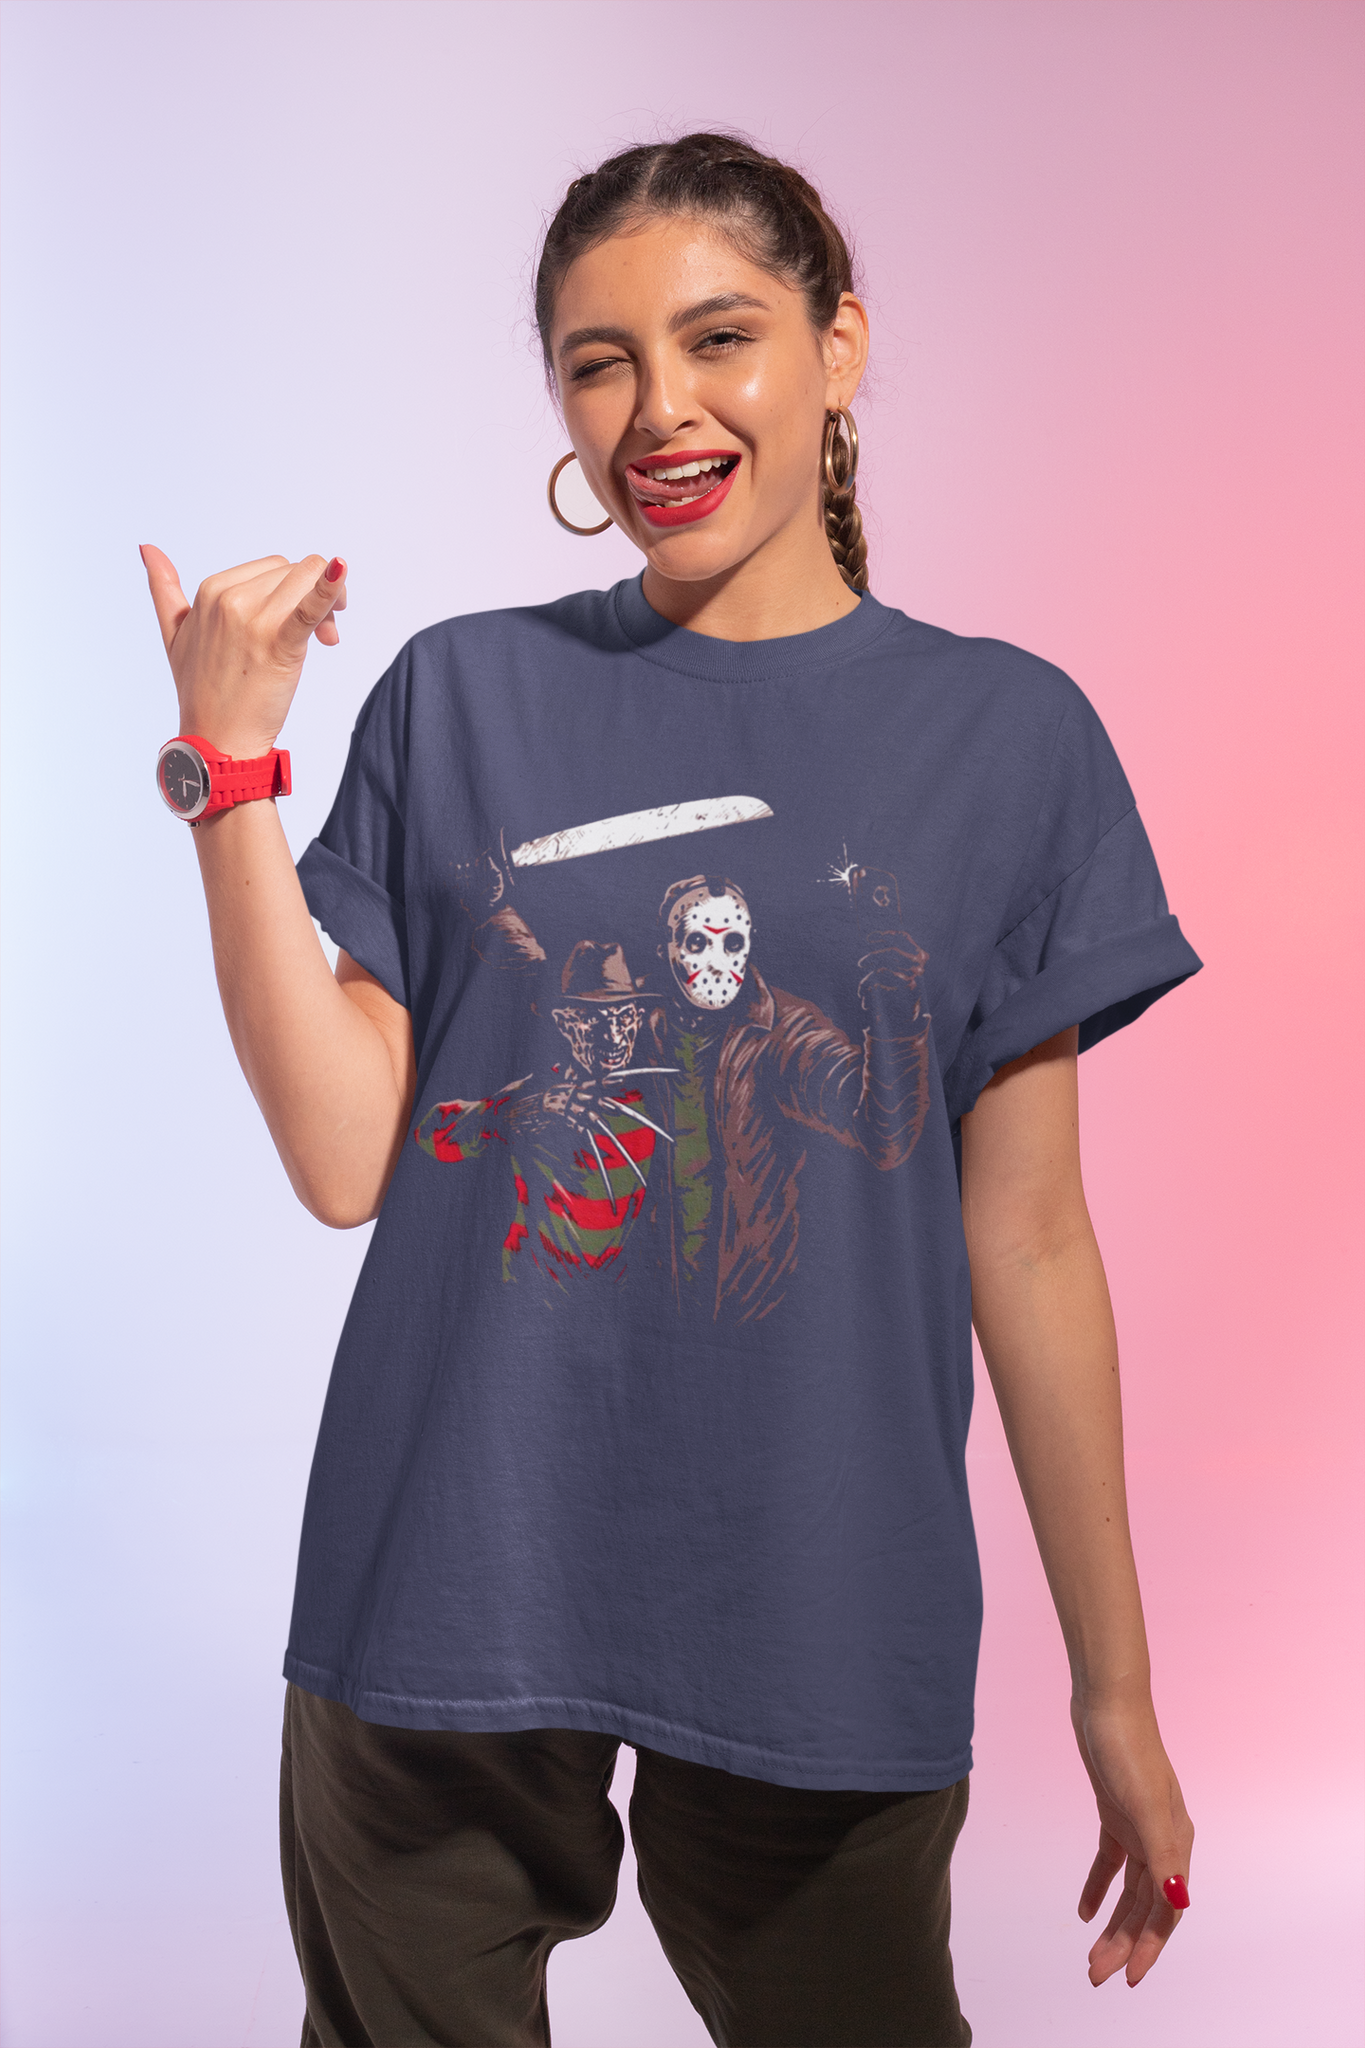 Nightmare On Elm Street T Shirt, Jason Voorhees Freddy Krueger T Shirt, Halloween Gifts